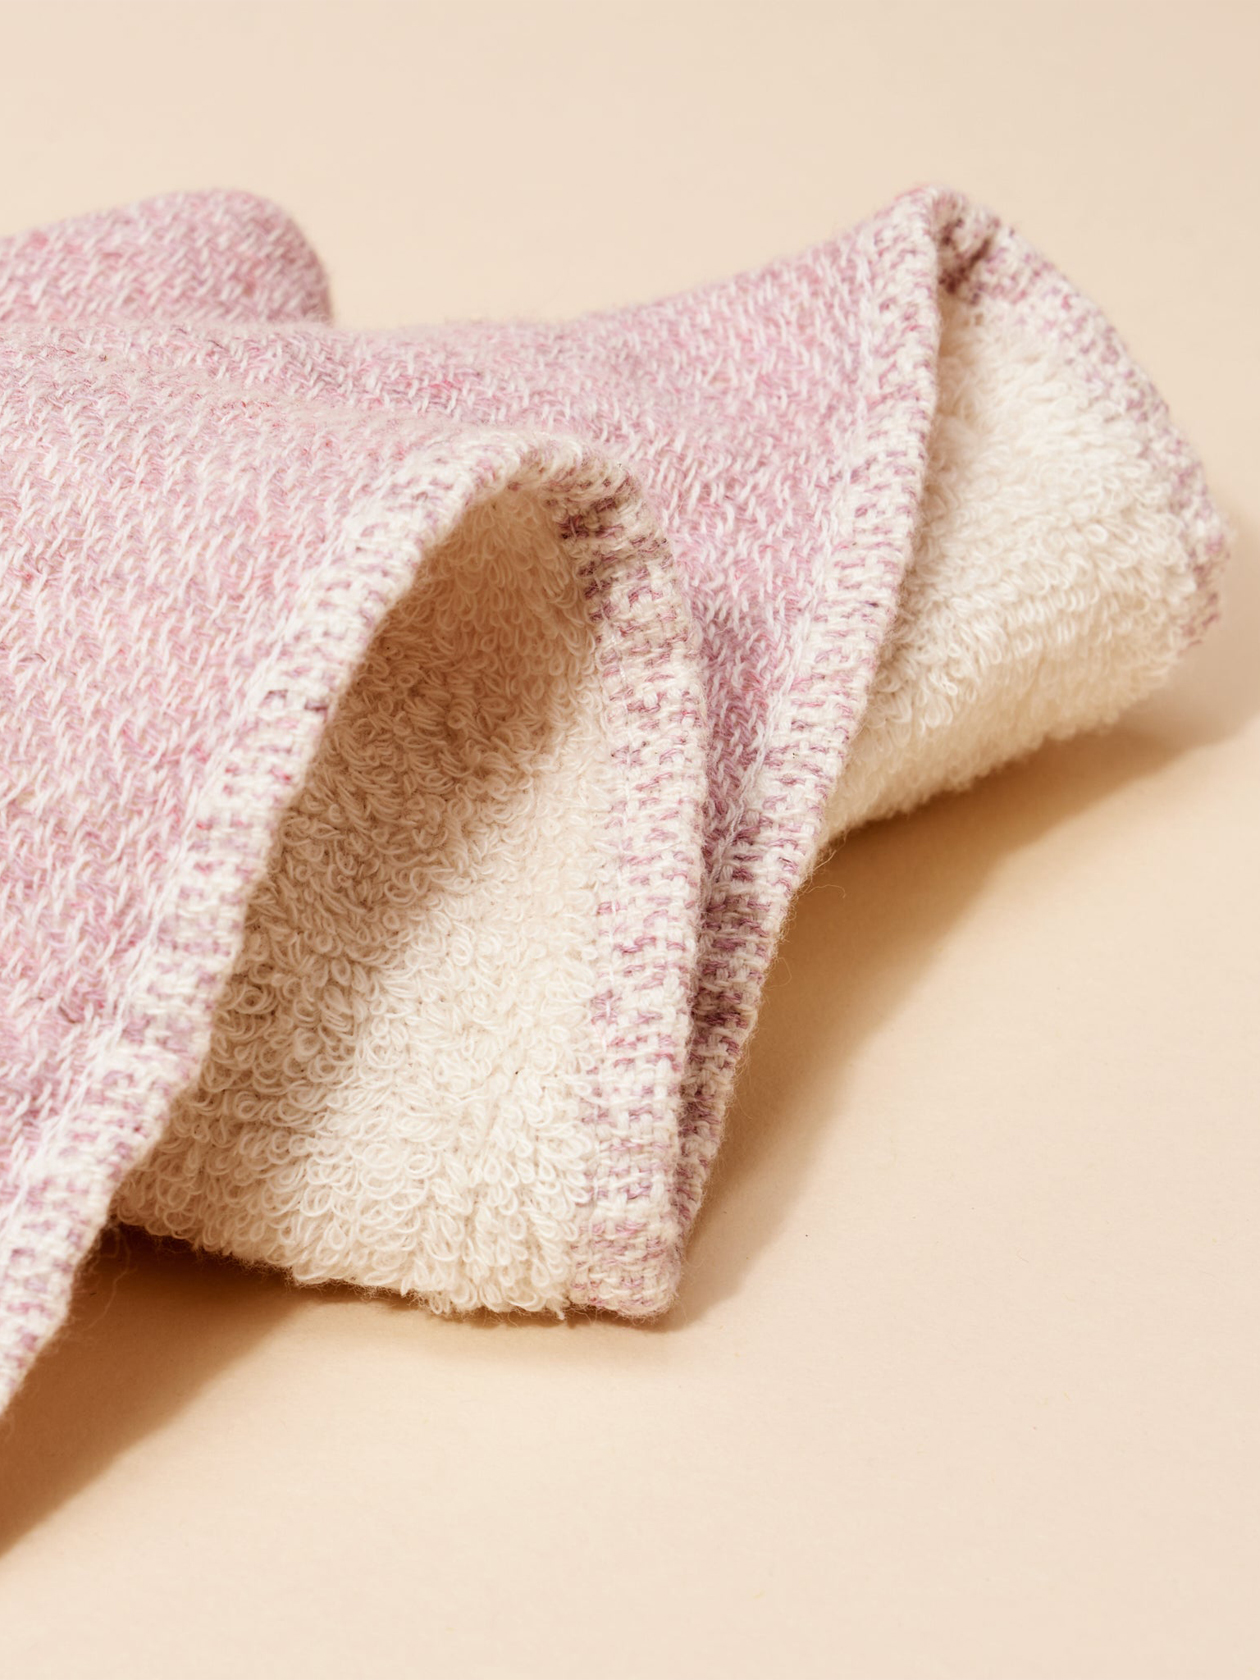 Organic Cotton Japanese Hand Towel, Pink